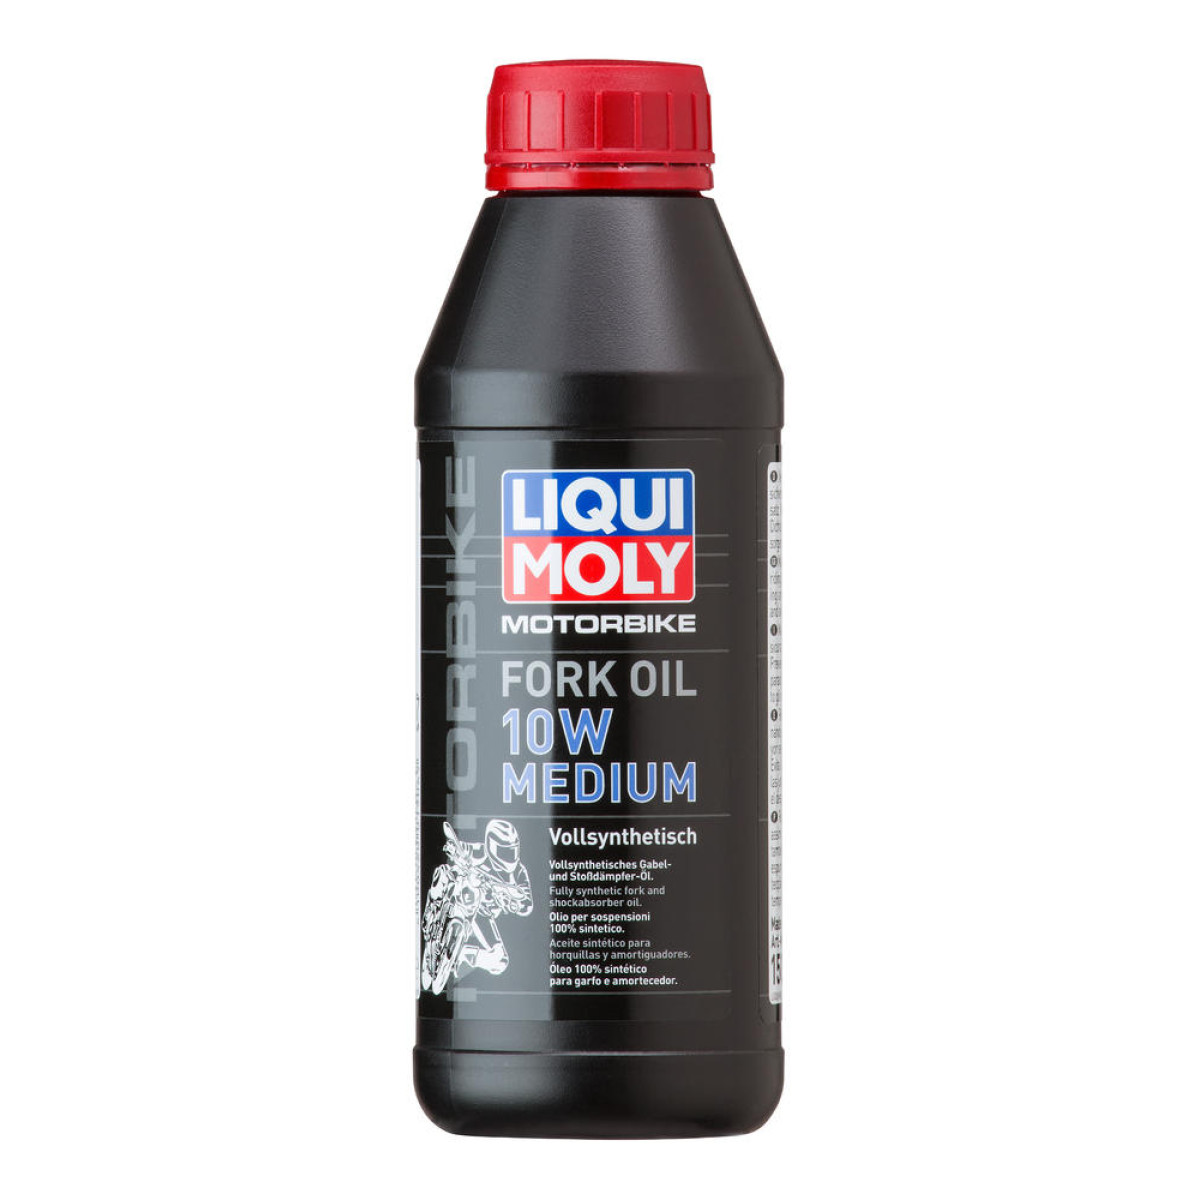 Liqui Moly Gabelöl  Medium, 10W, 1 Liter